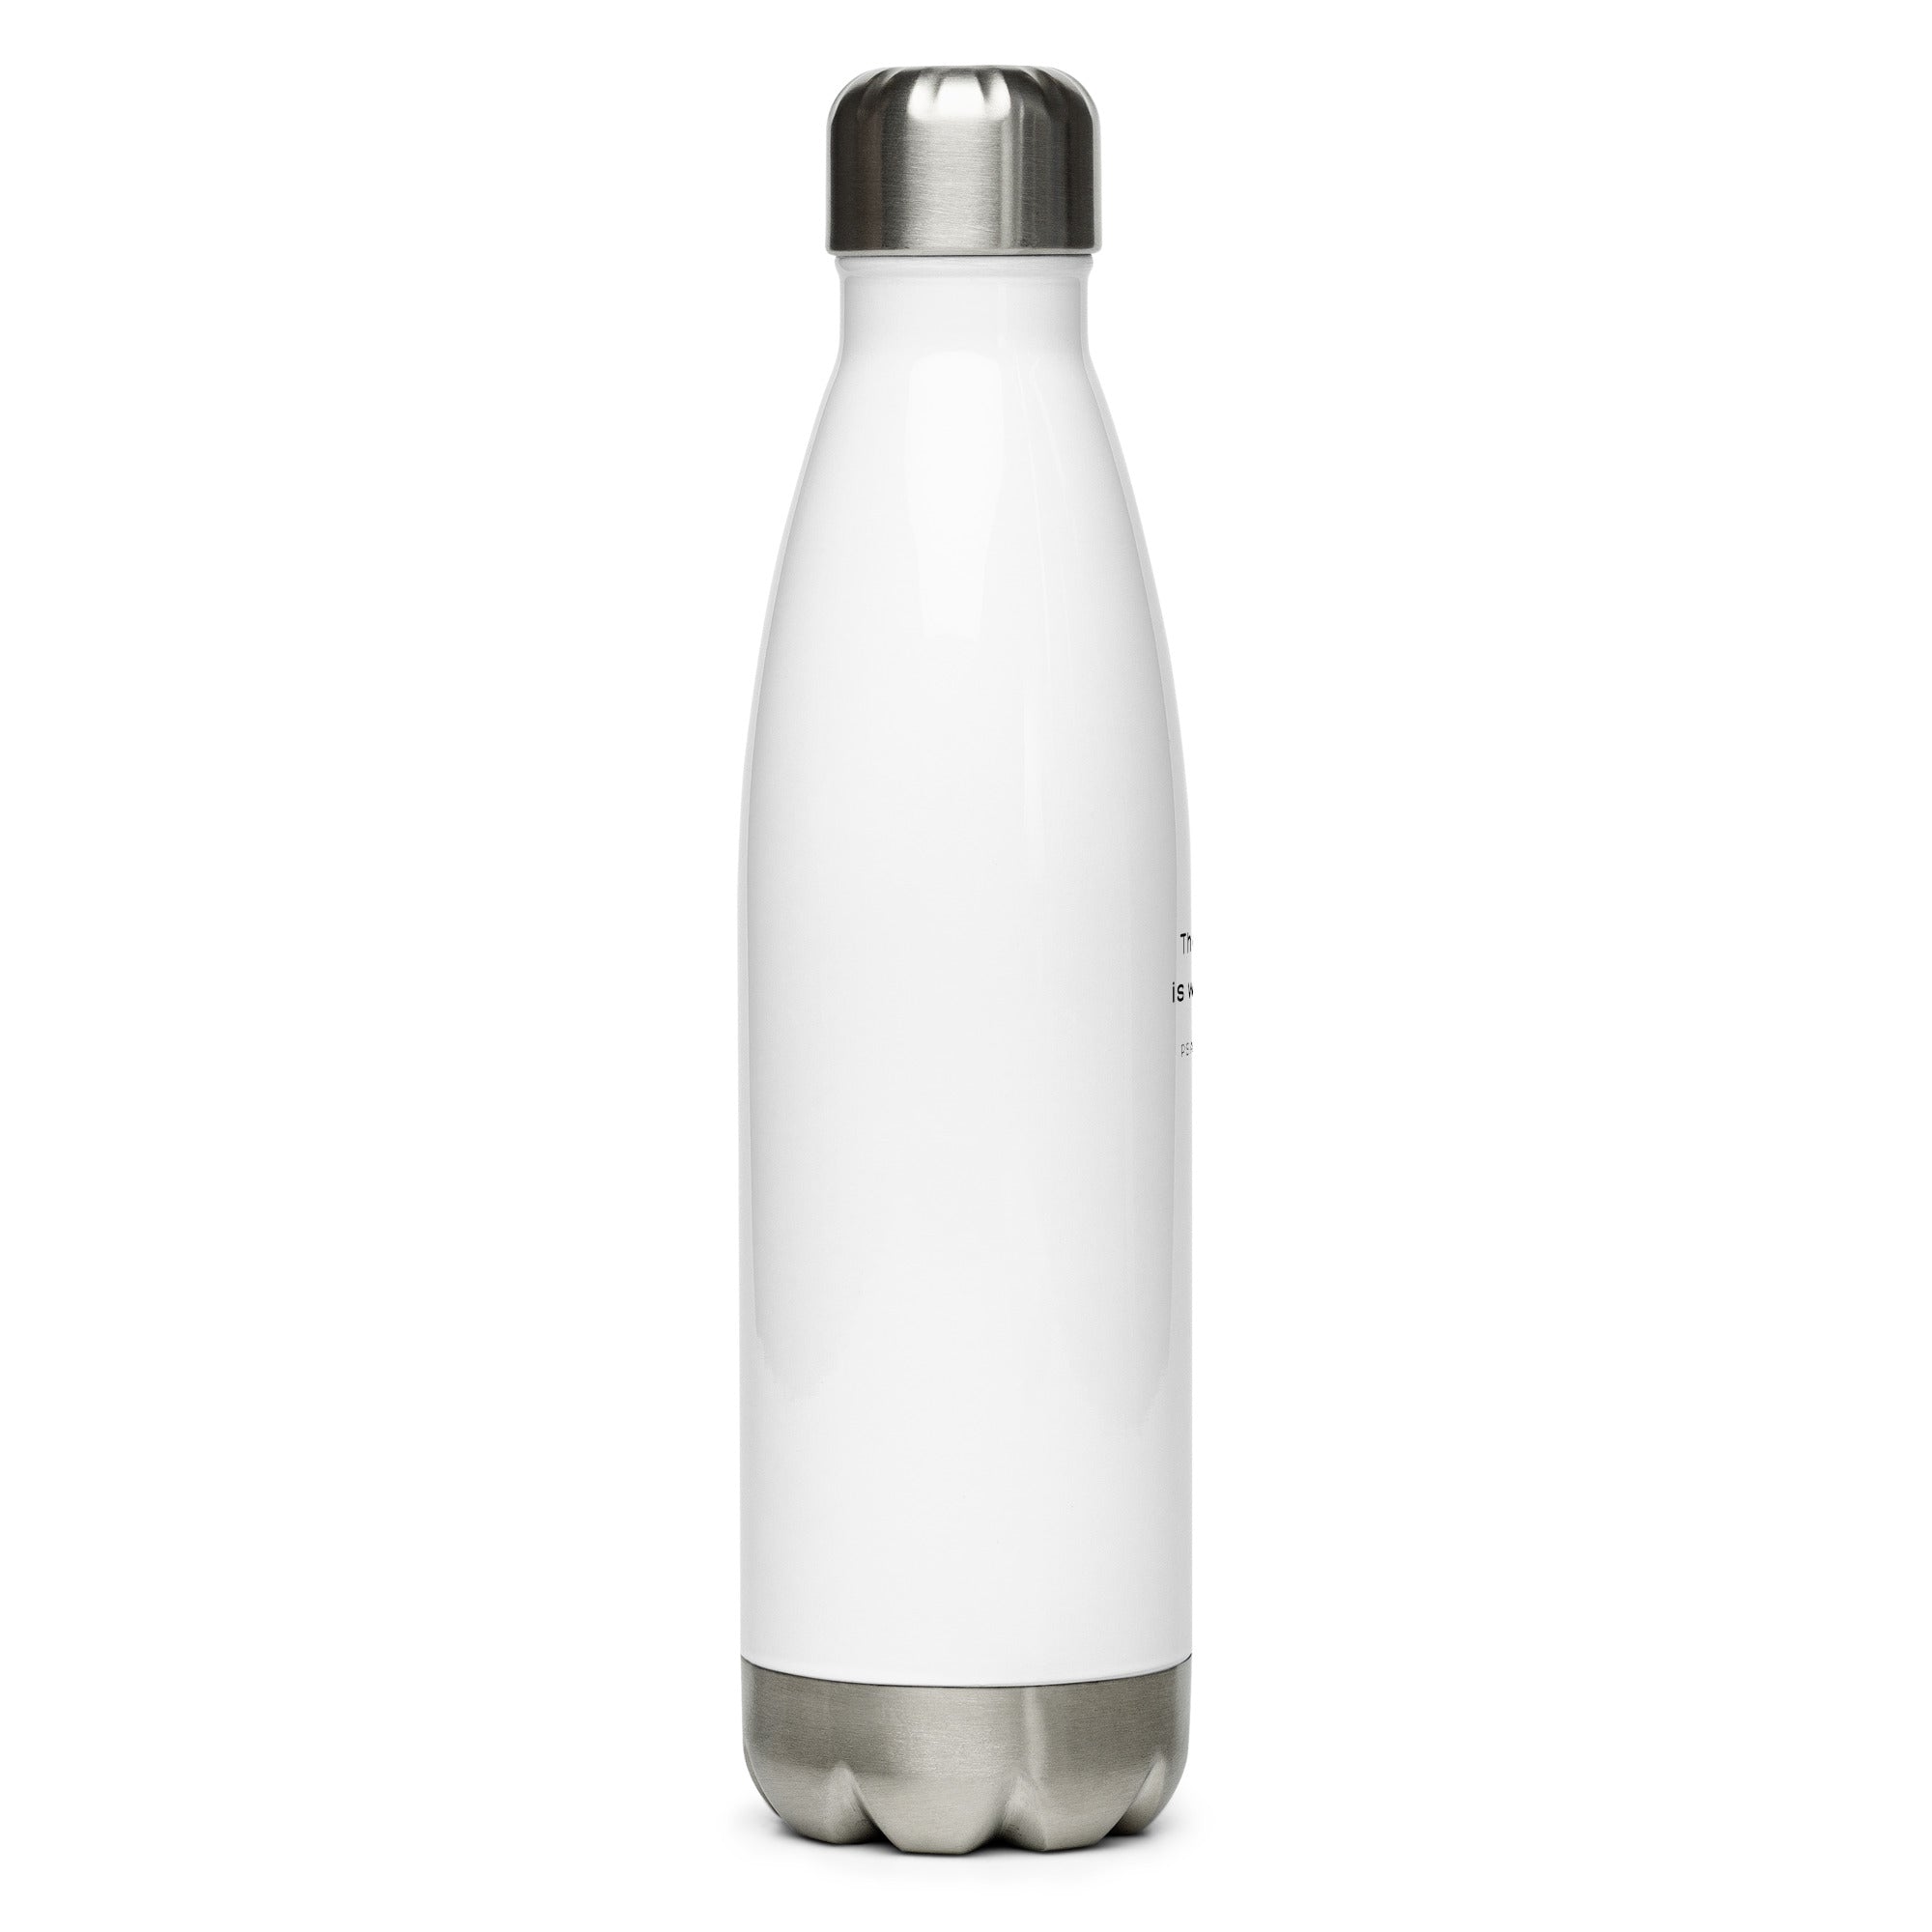 Stainless steel water bottle - Psalm 118:6